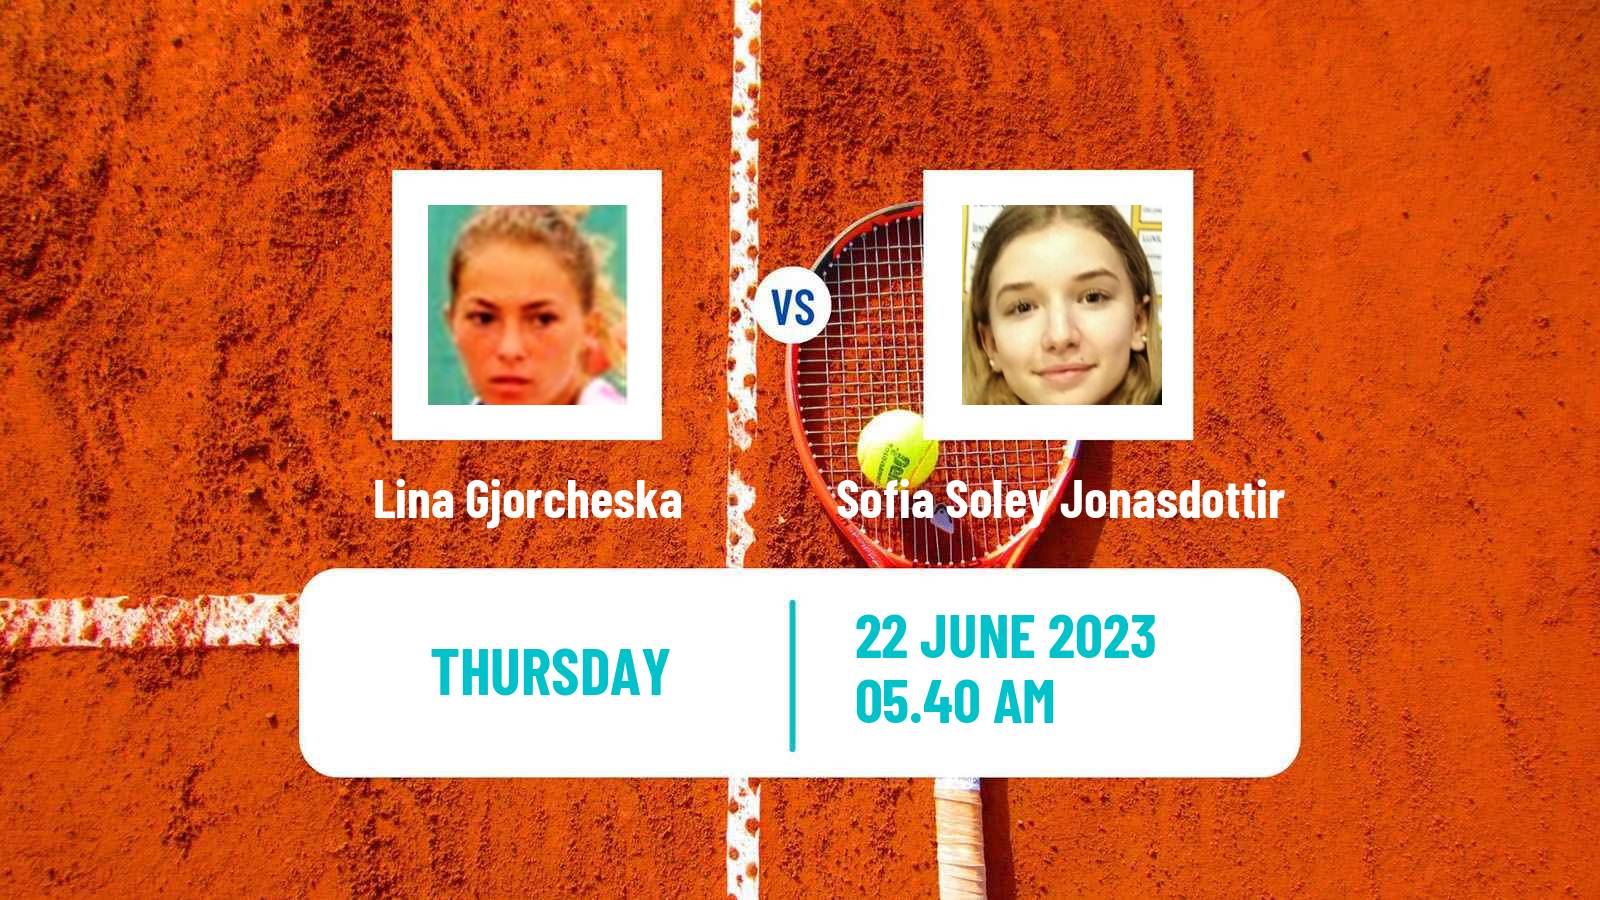 Tennis WTA Billie Jean King Cup Group III Lina Gjorcheska - Sofia Soley Jonasdottir